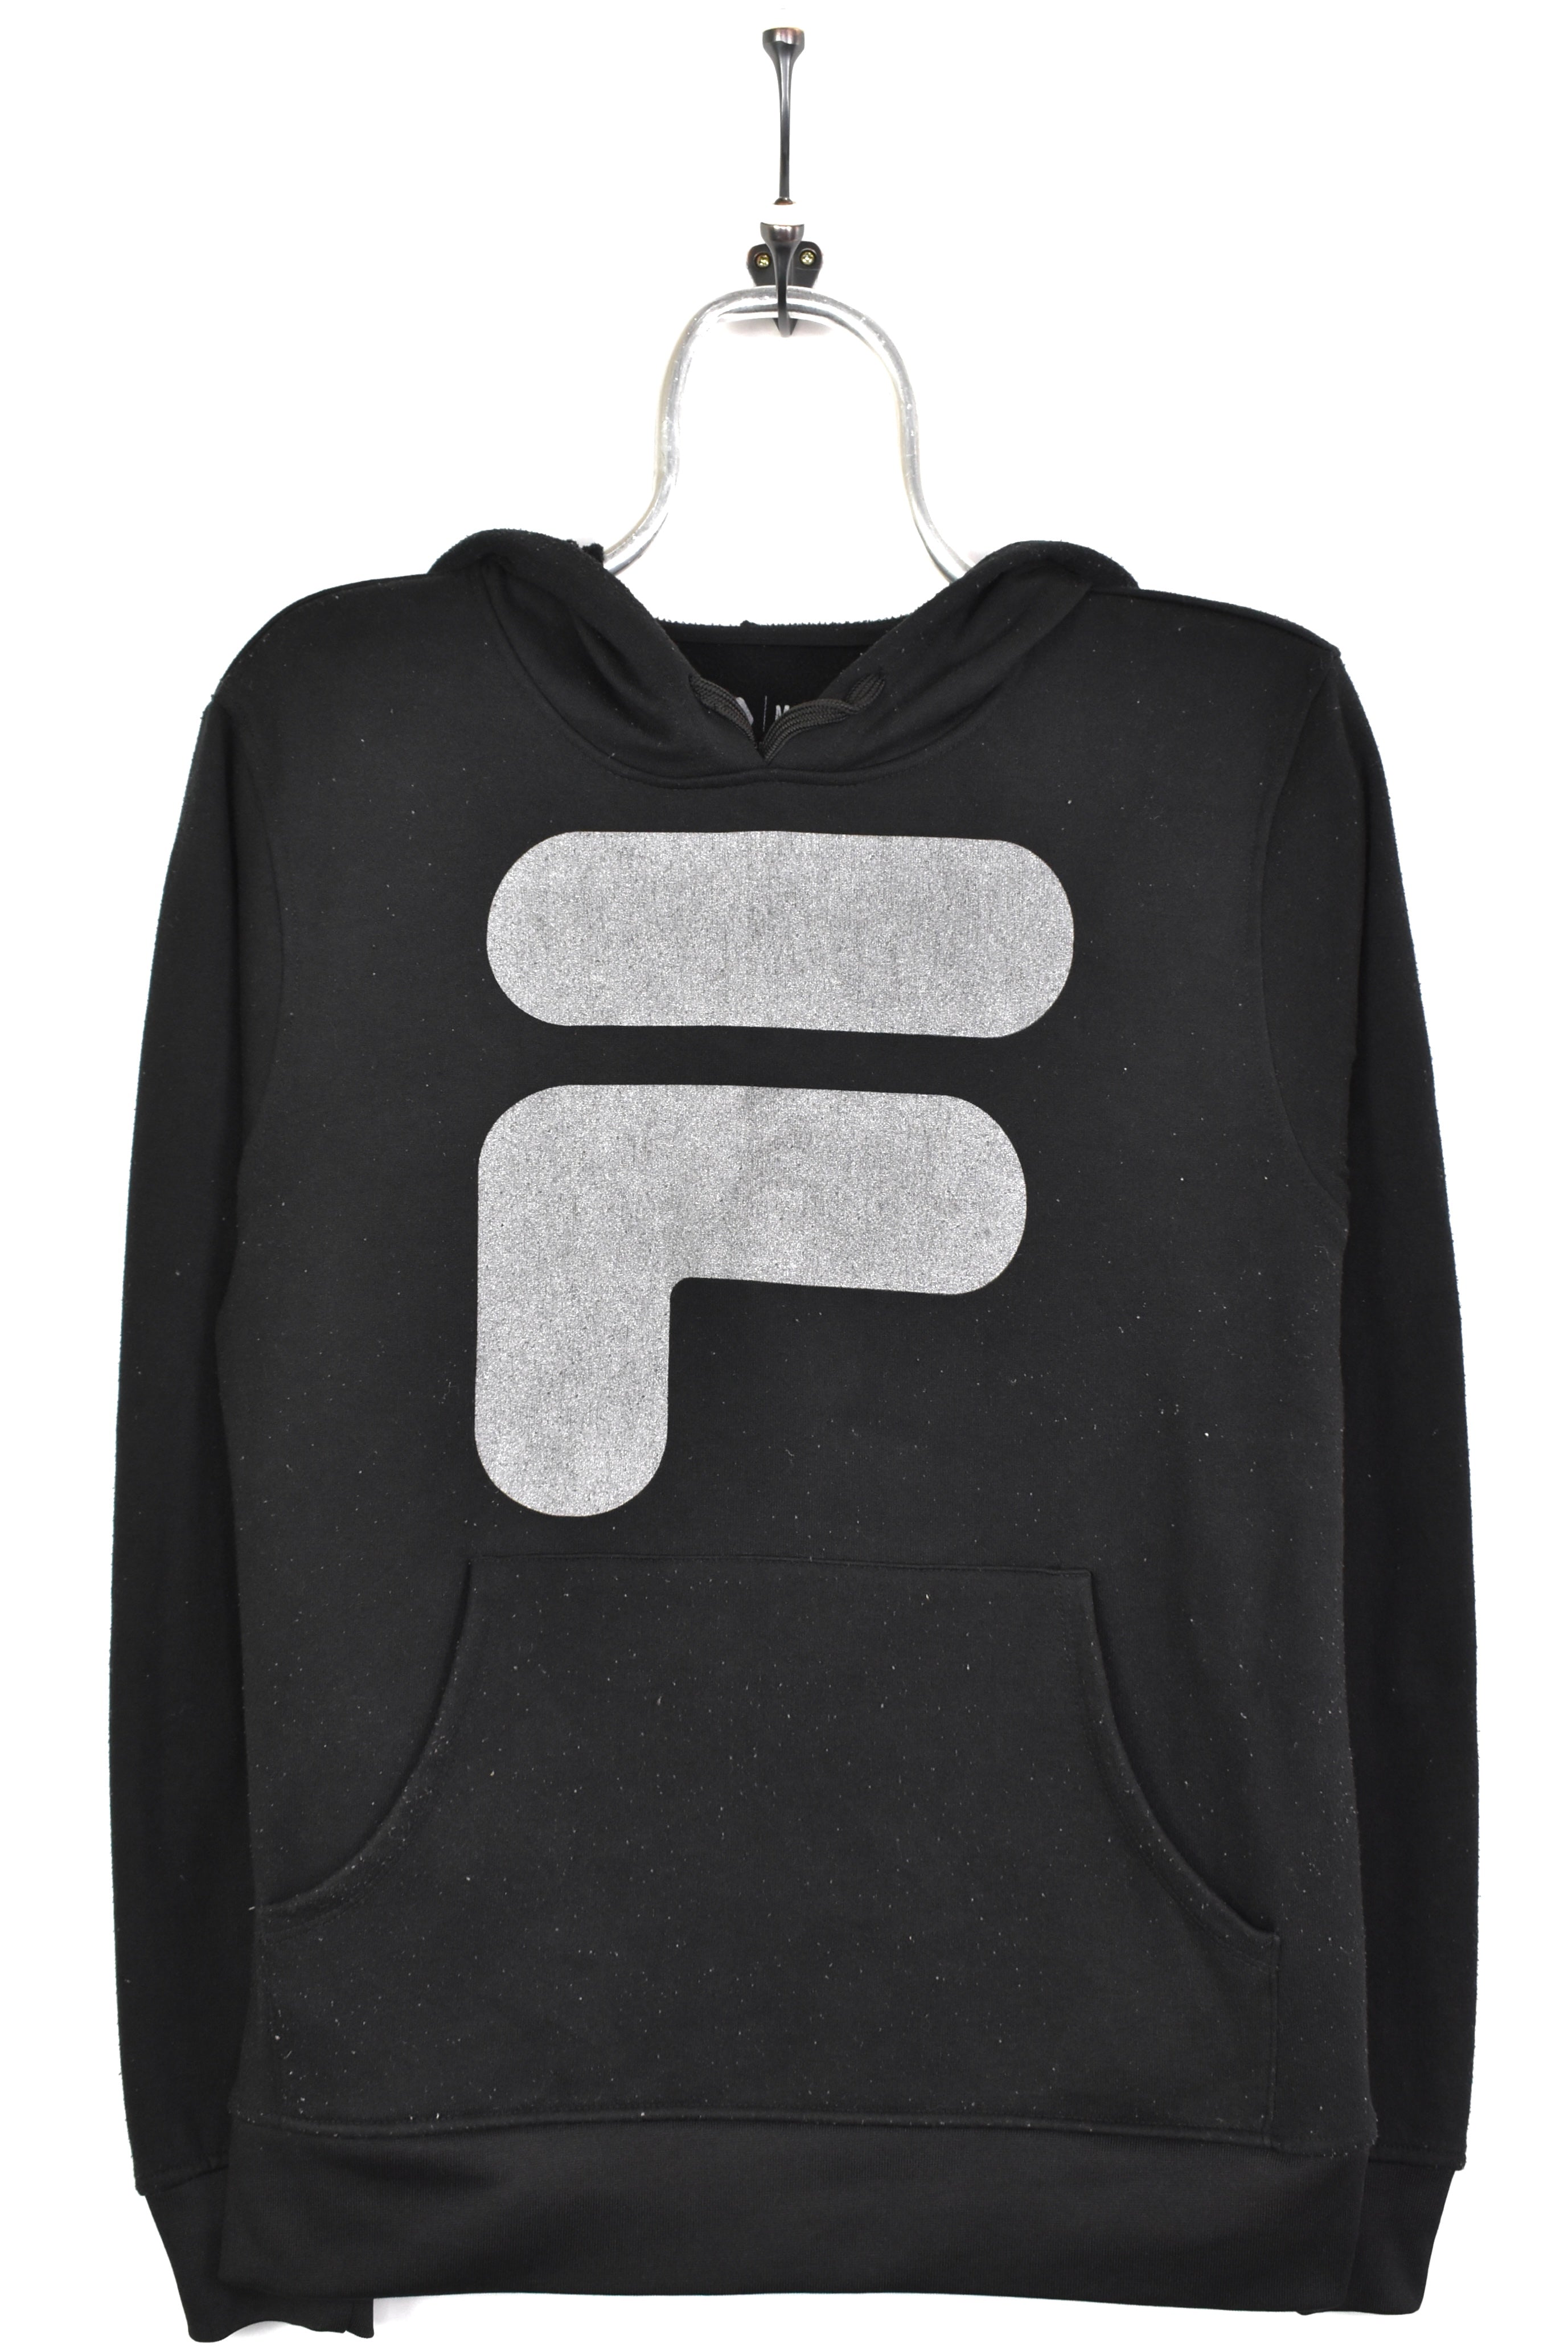 Modern Fila hoodie, long sleeve graphic sweatshirt - small, black FILA